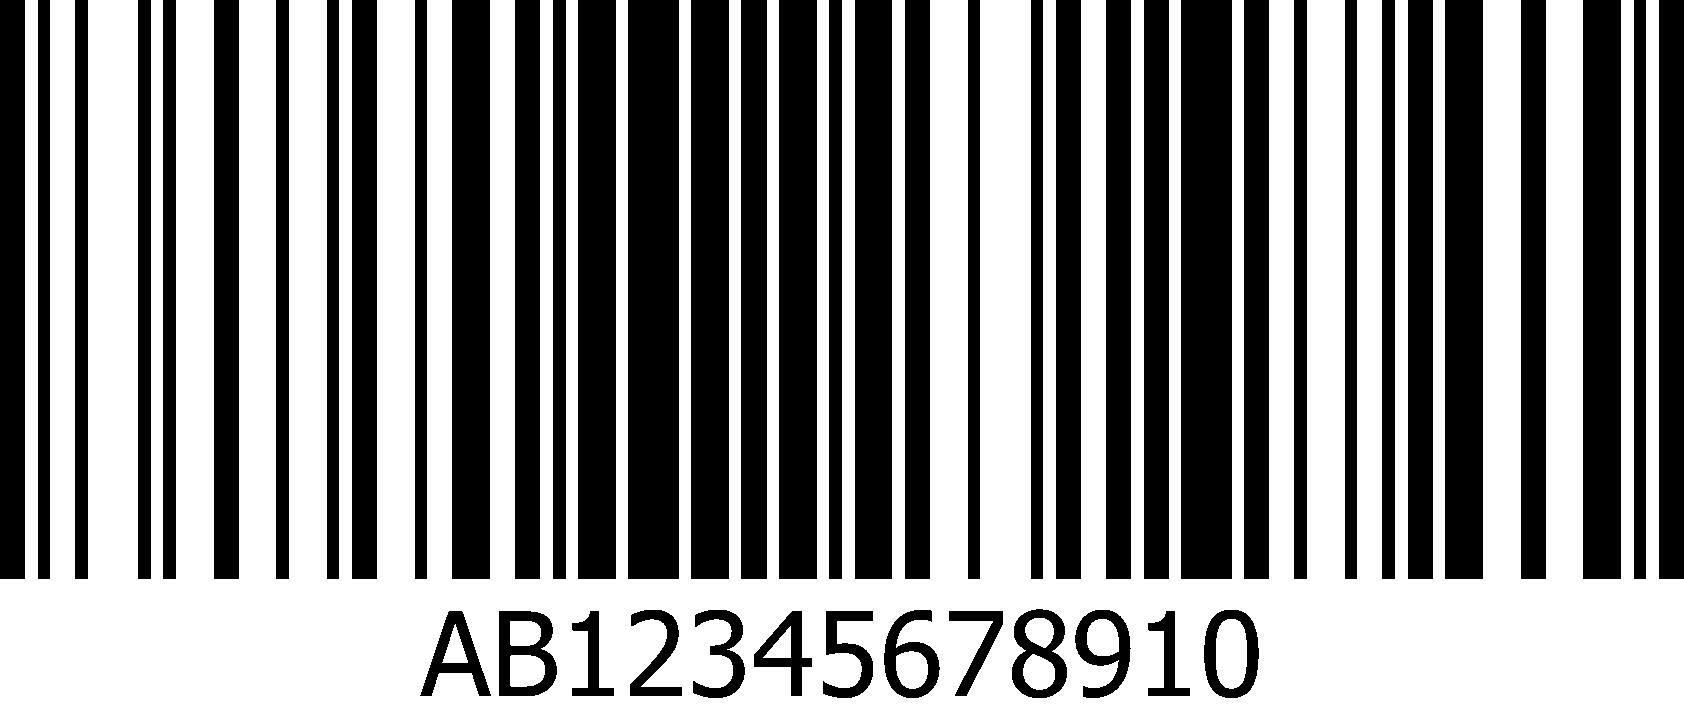 Code 128 barcode font ttf free